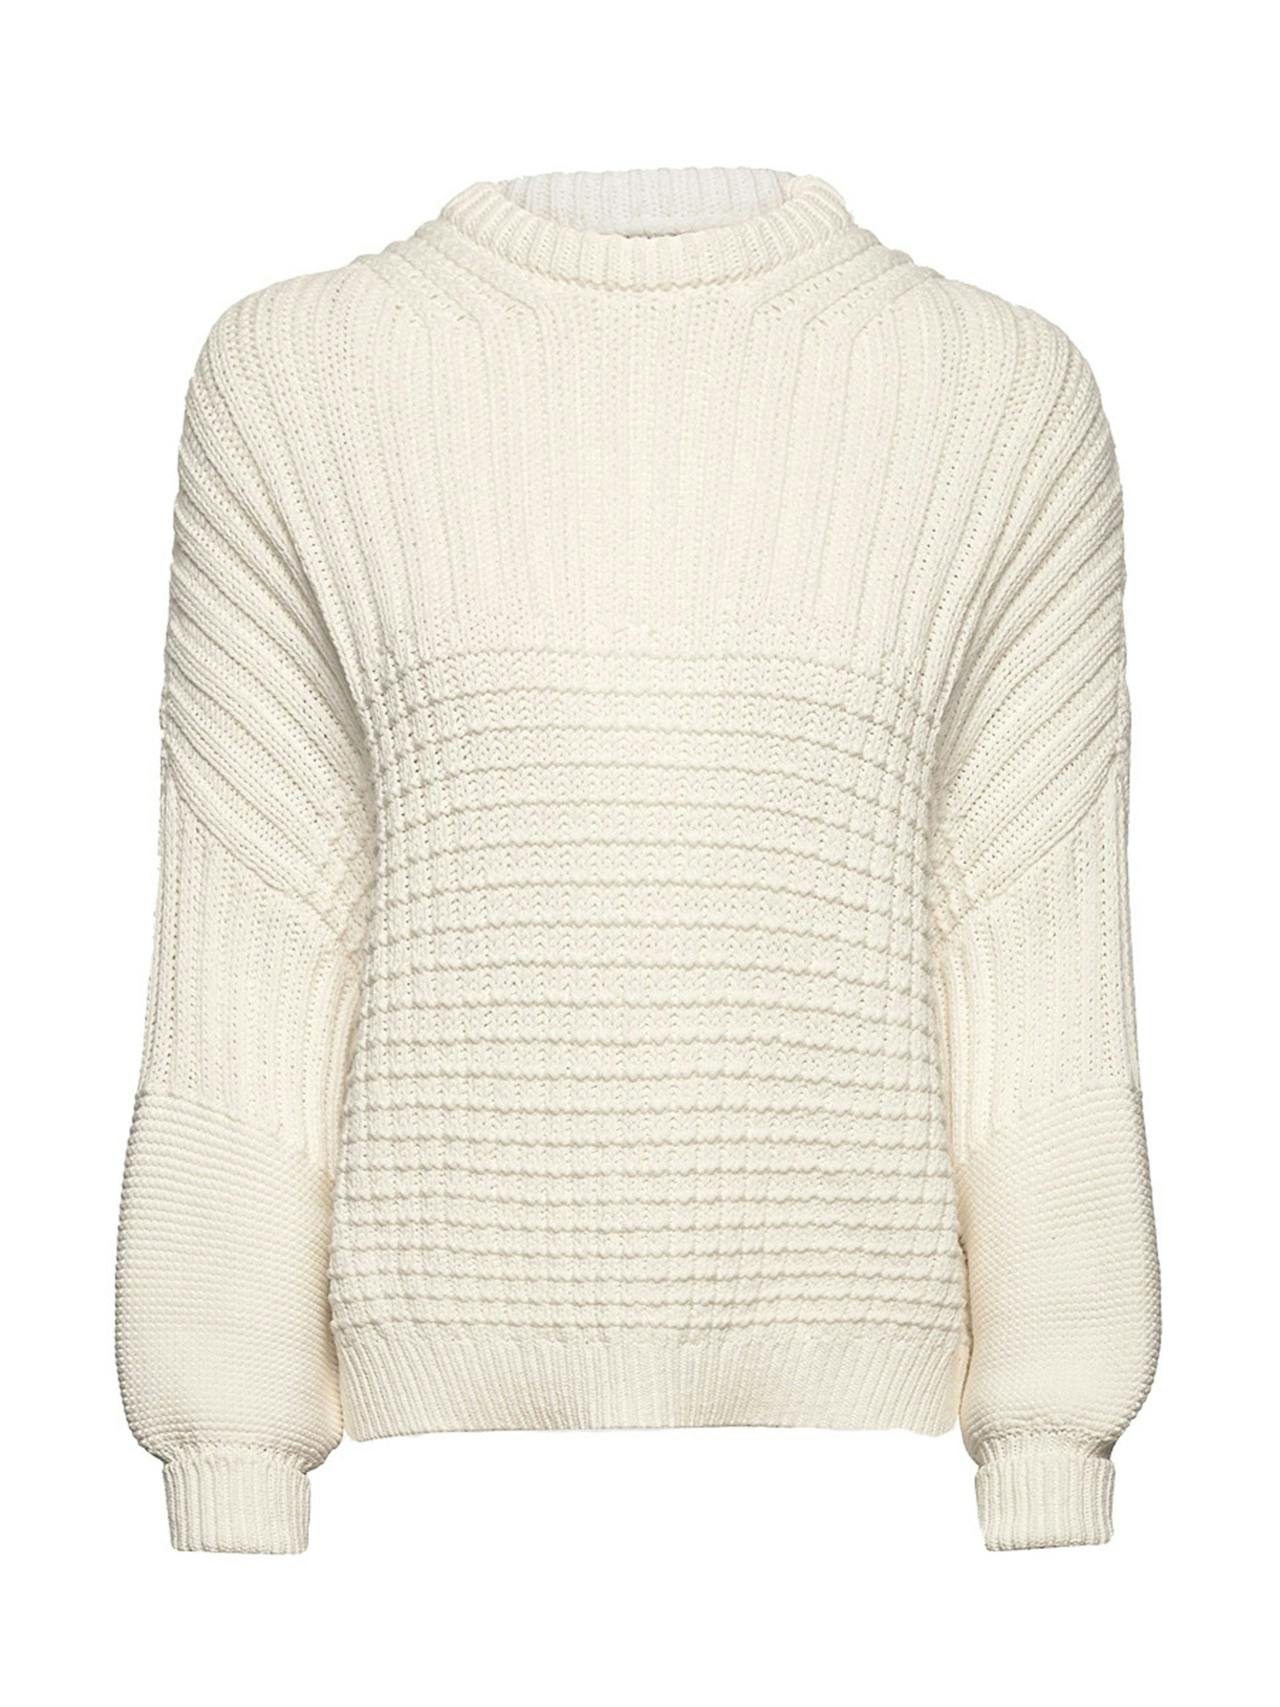 Delčia off-white cotton sweater